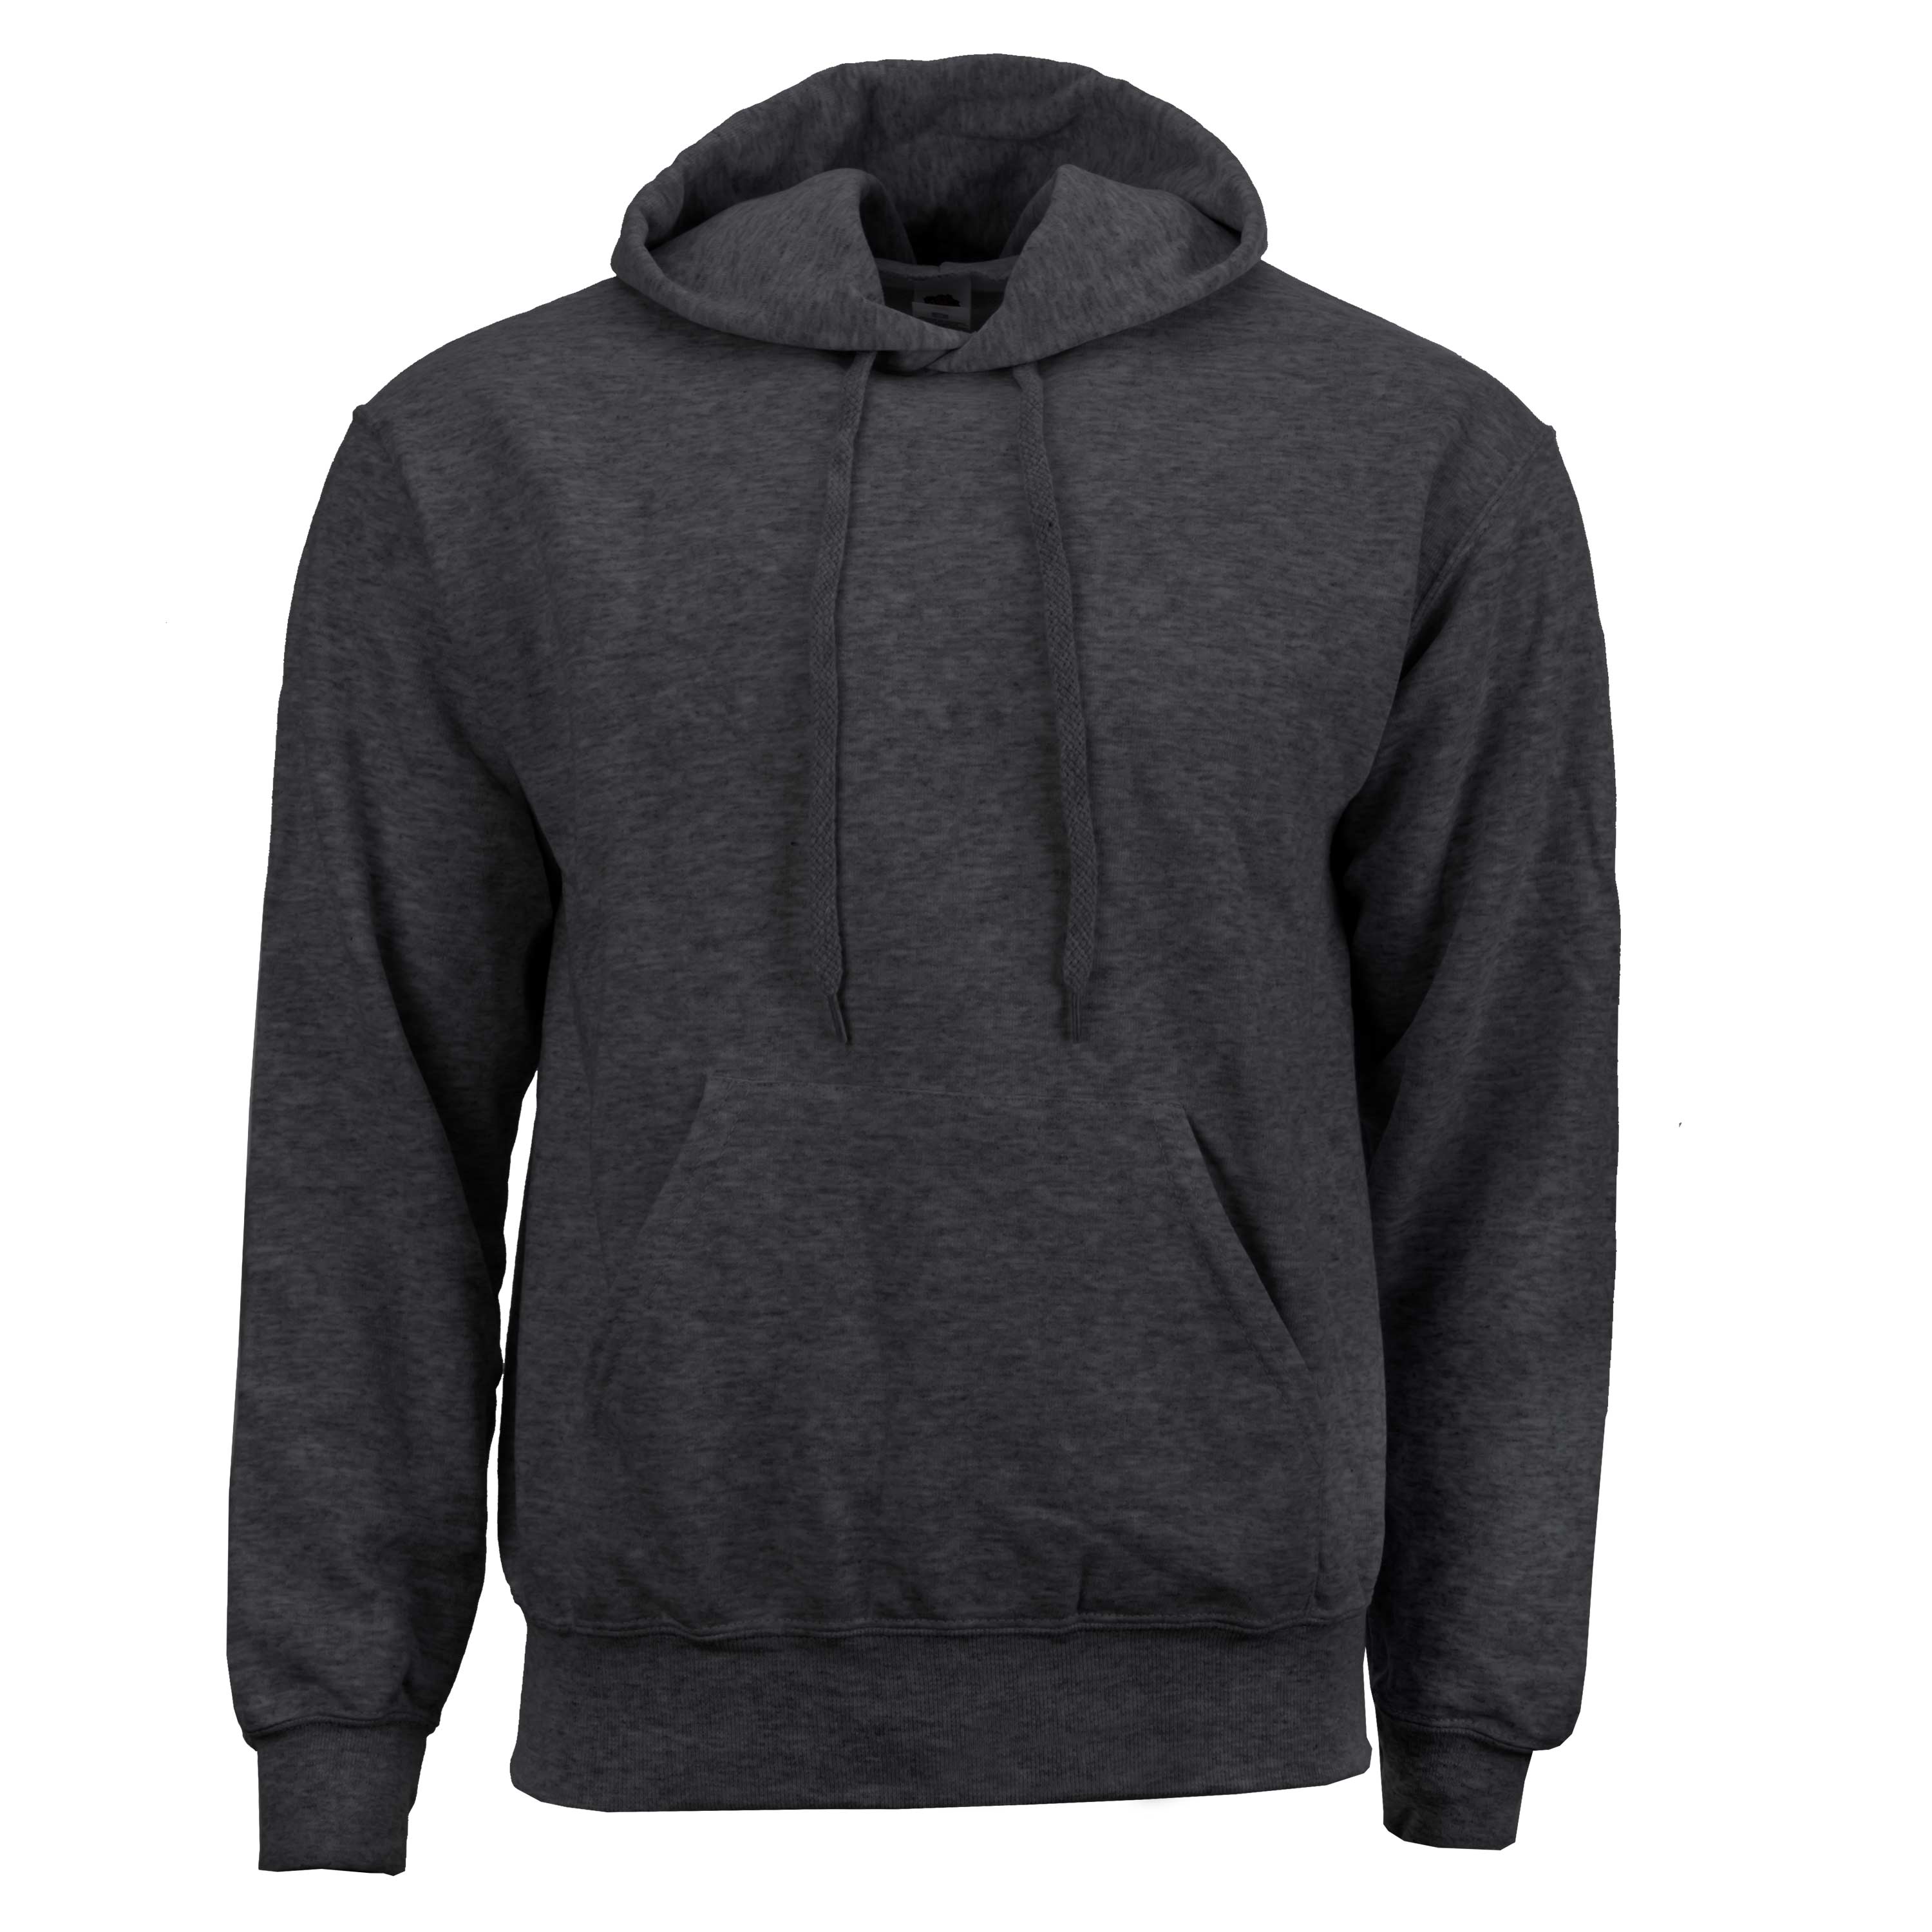 Purchase the Hooded Sweatshirt black by ASMC